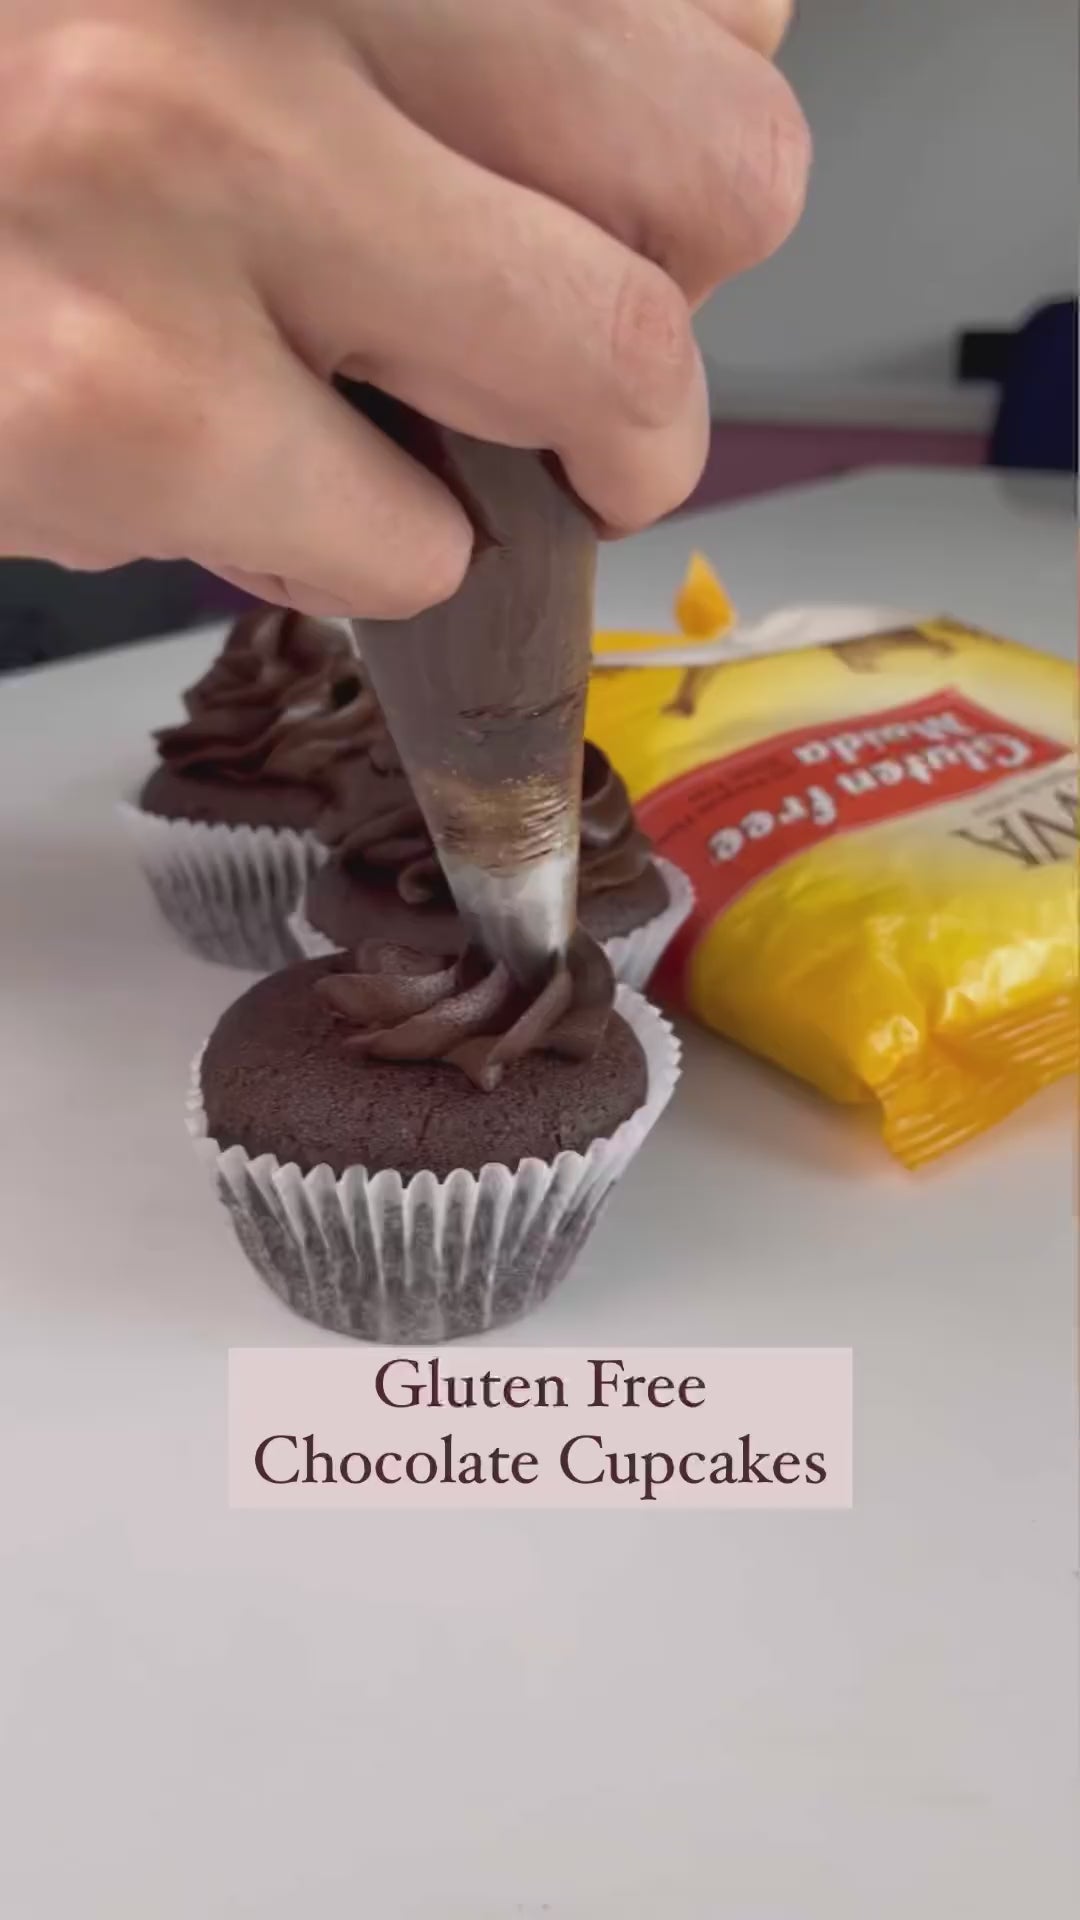 buy gluten free online-jiwa organic chocolate cup cake recipes